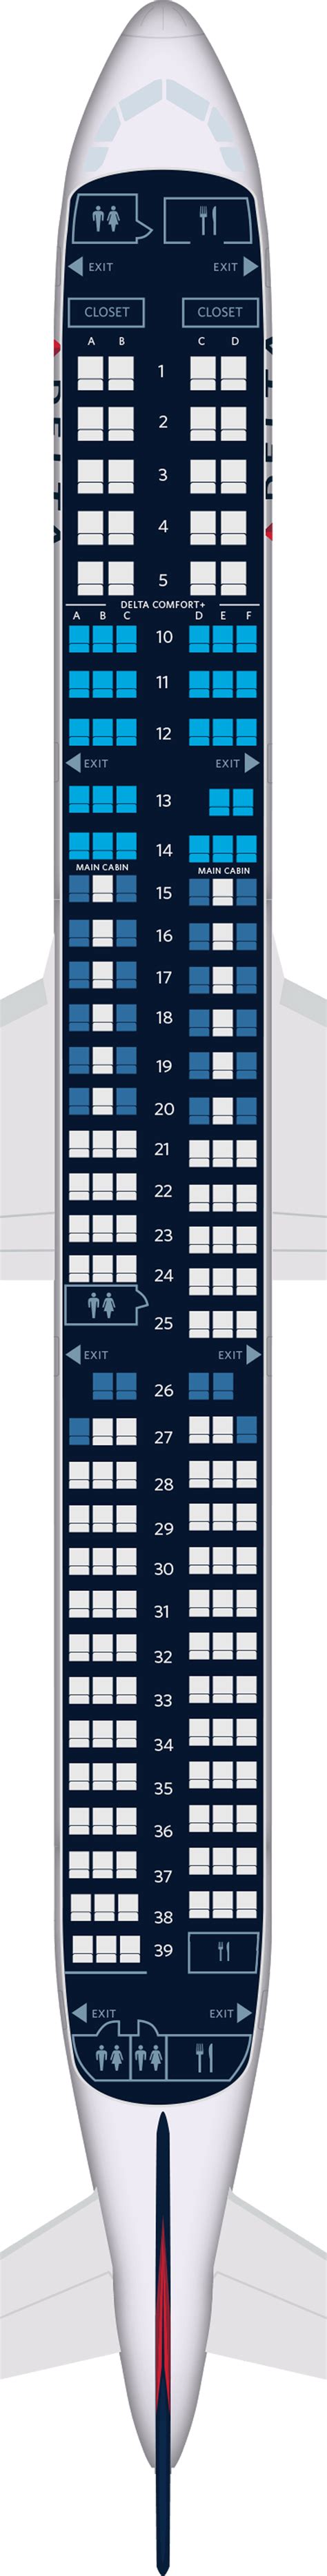 A320 Airbus Seating Diagram